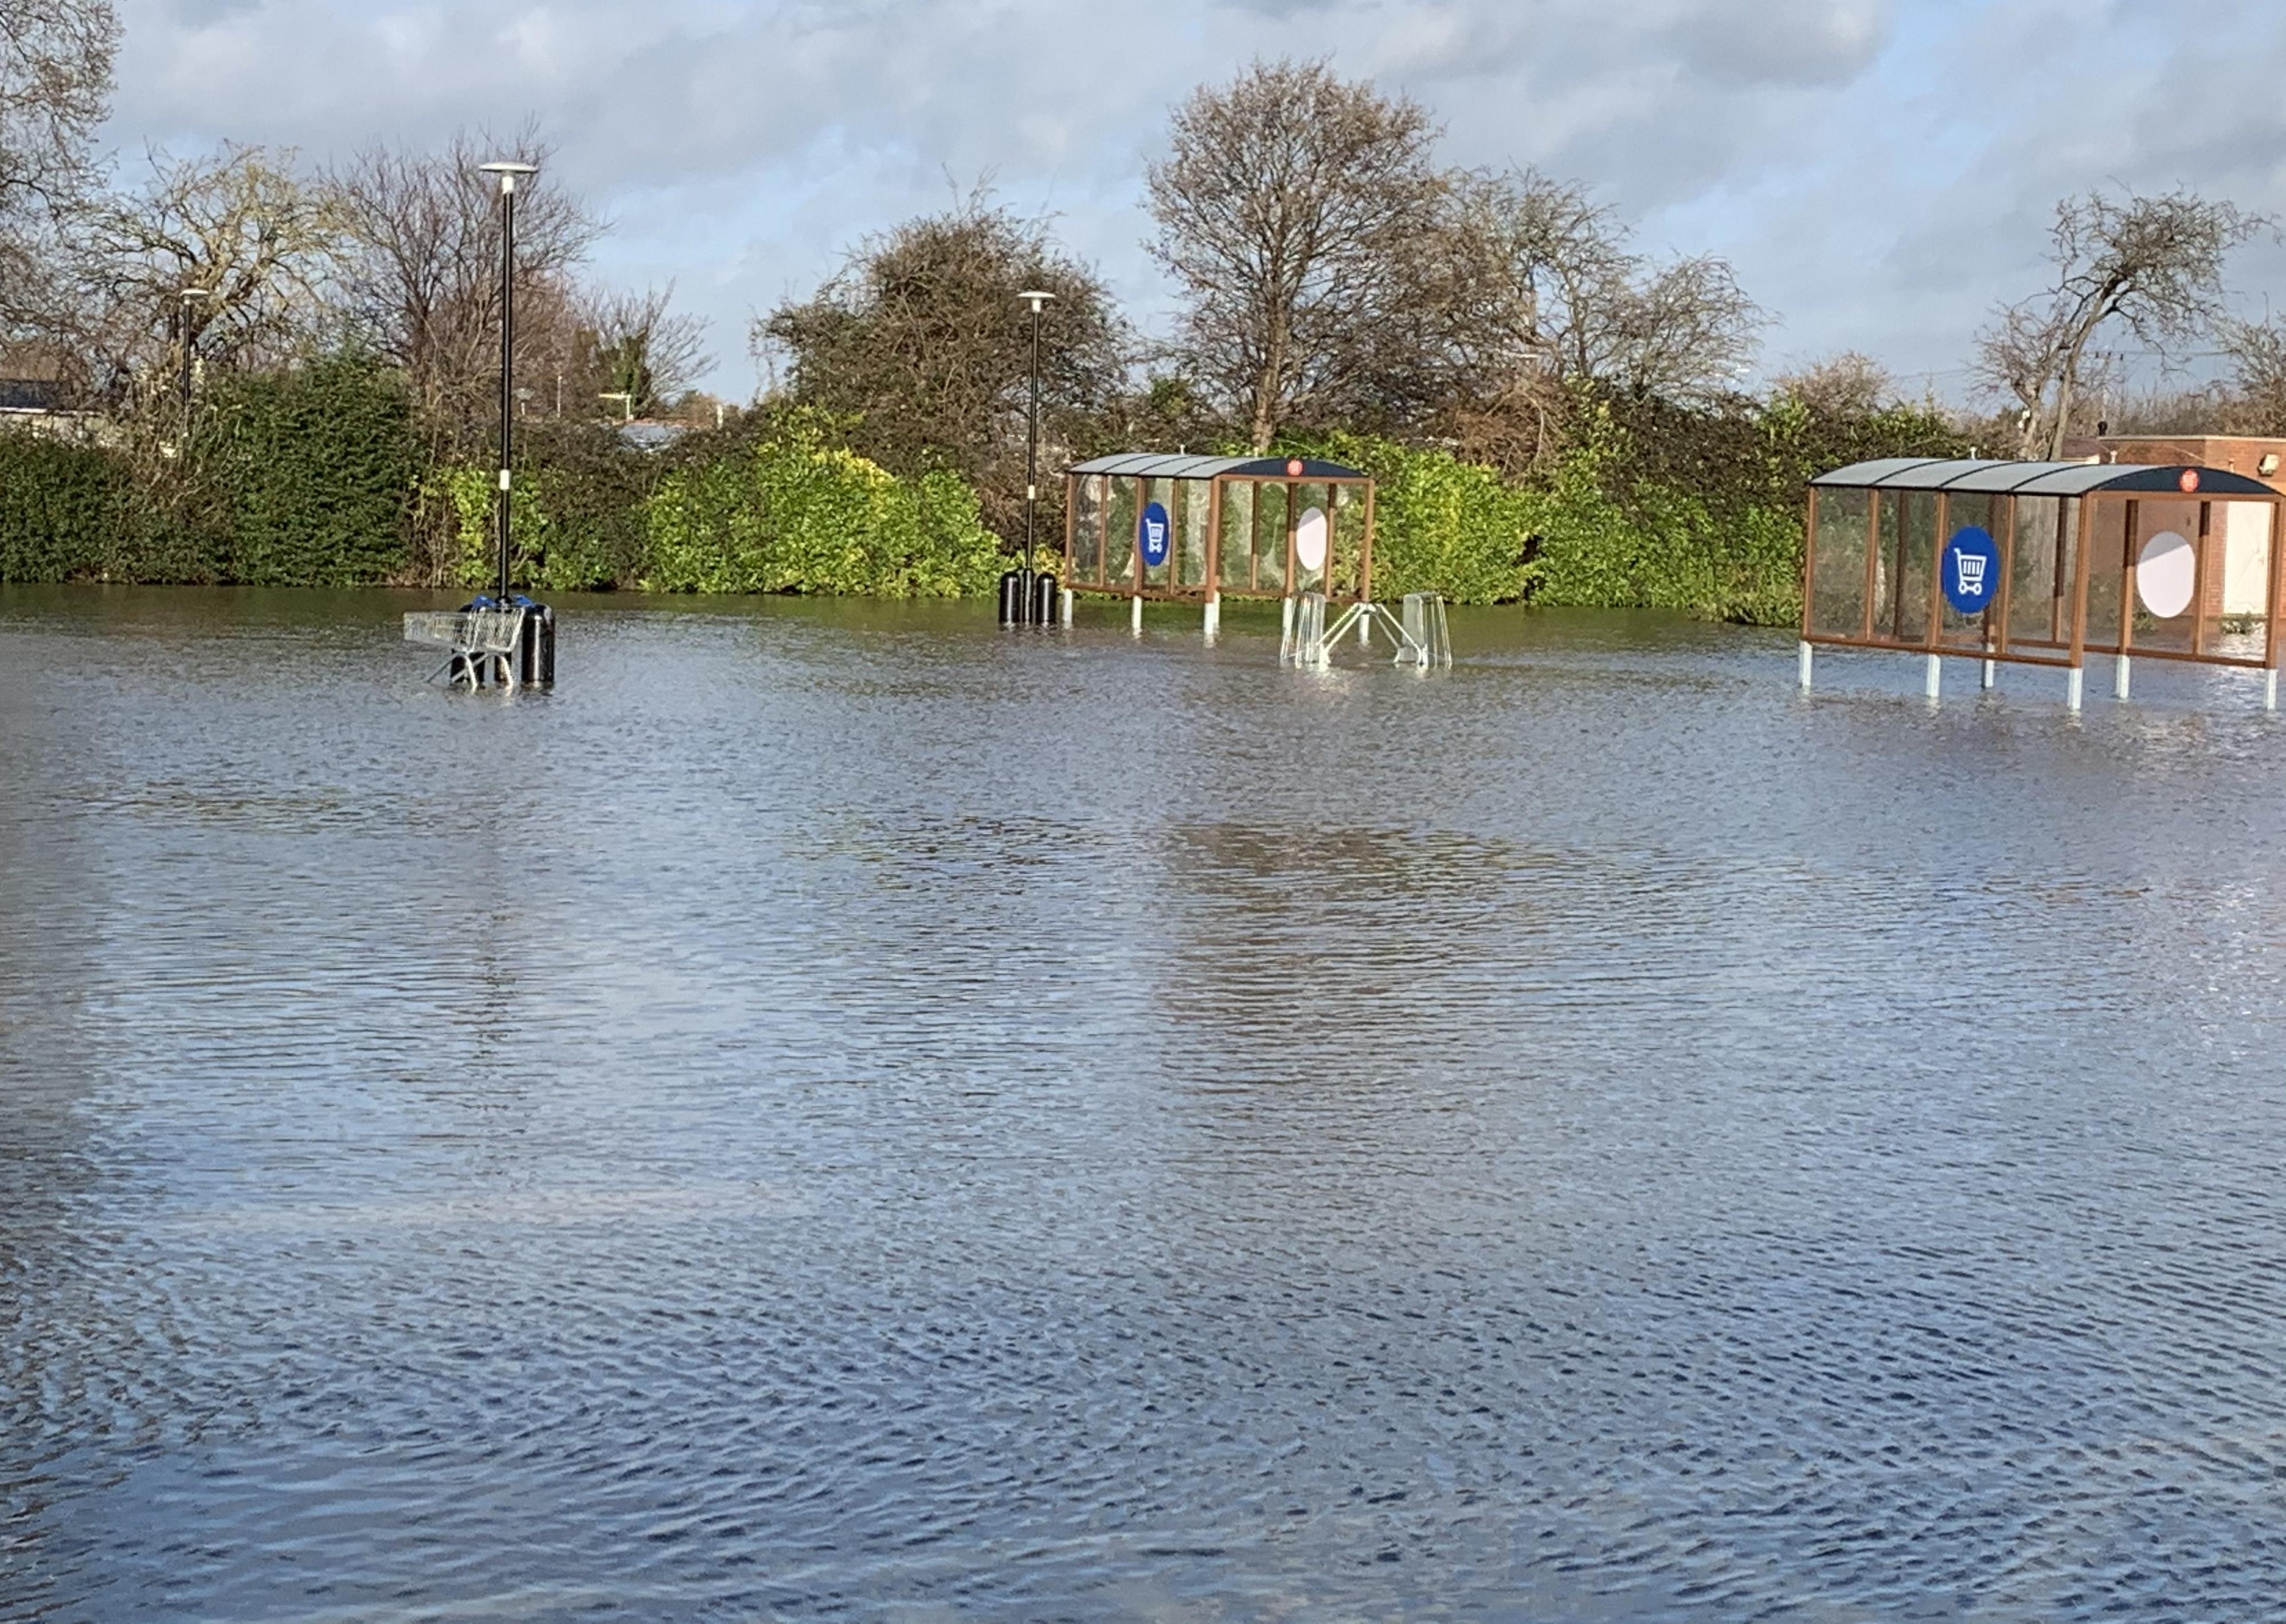 Tesco’s car park in Bognor Regis has been left under water after more flooding over the weekend. SUS-191223-143645001